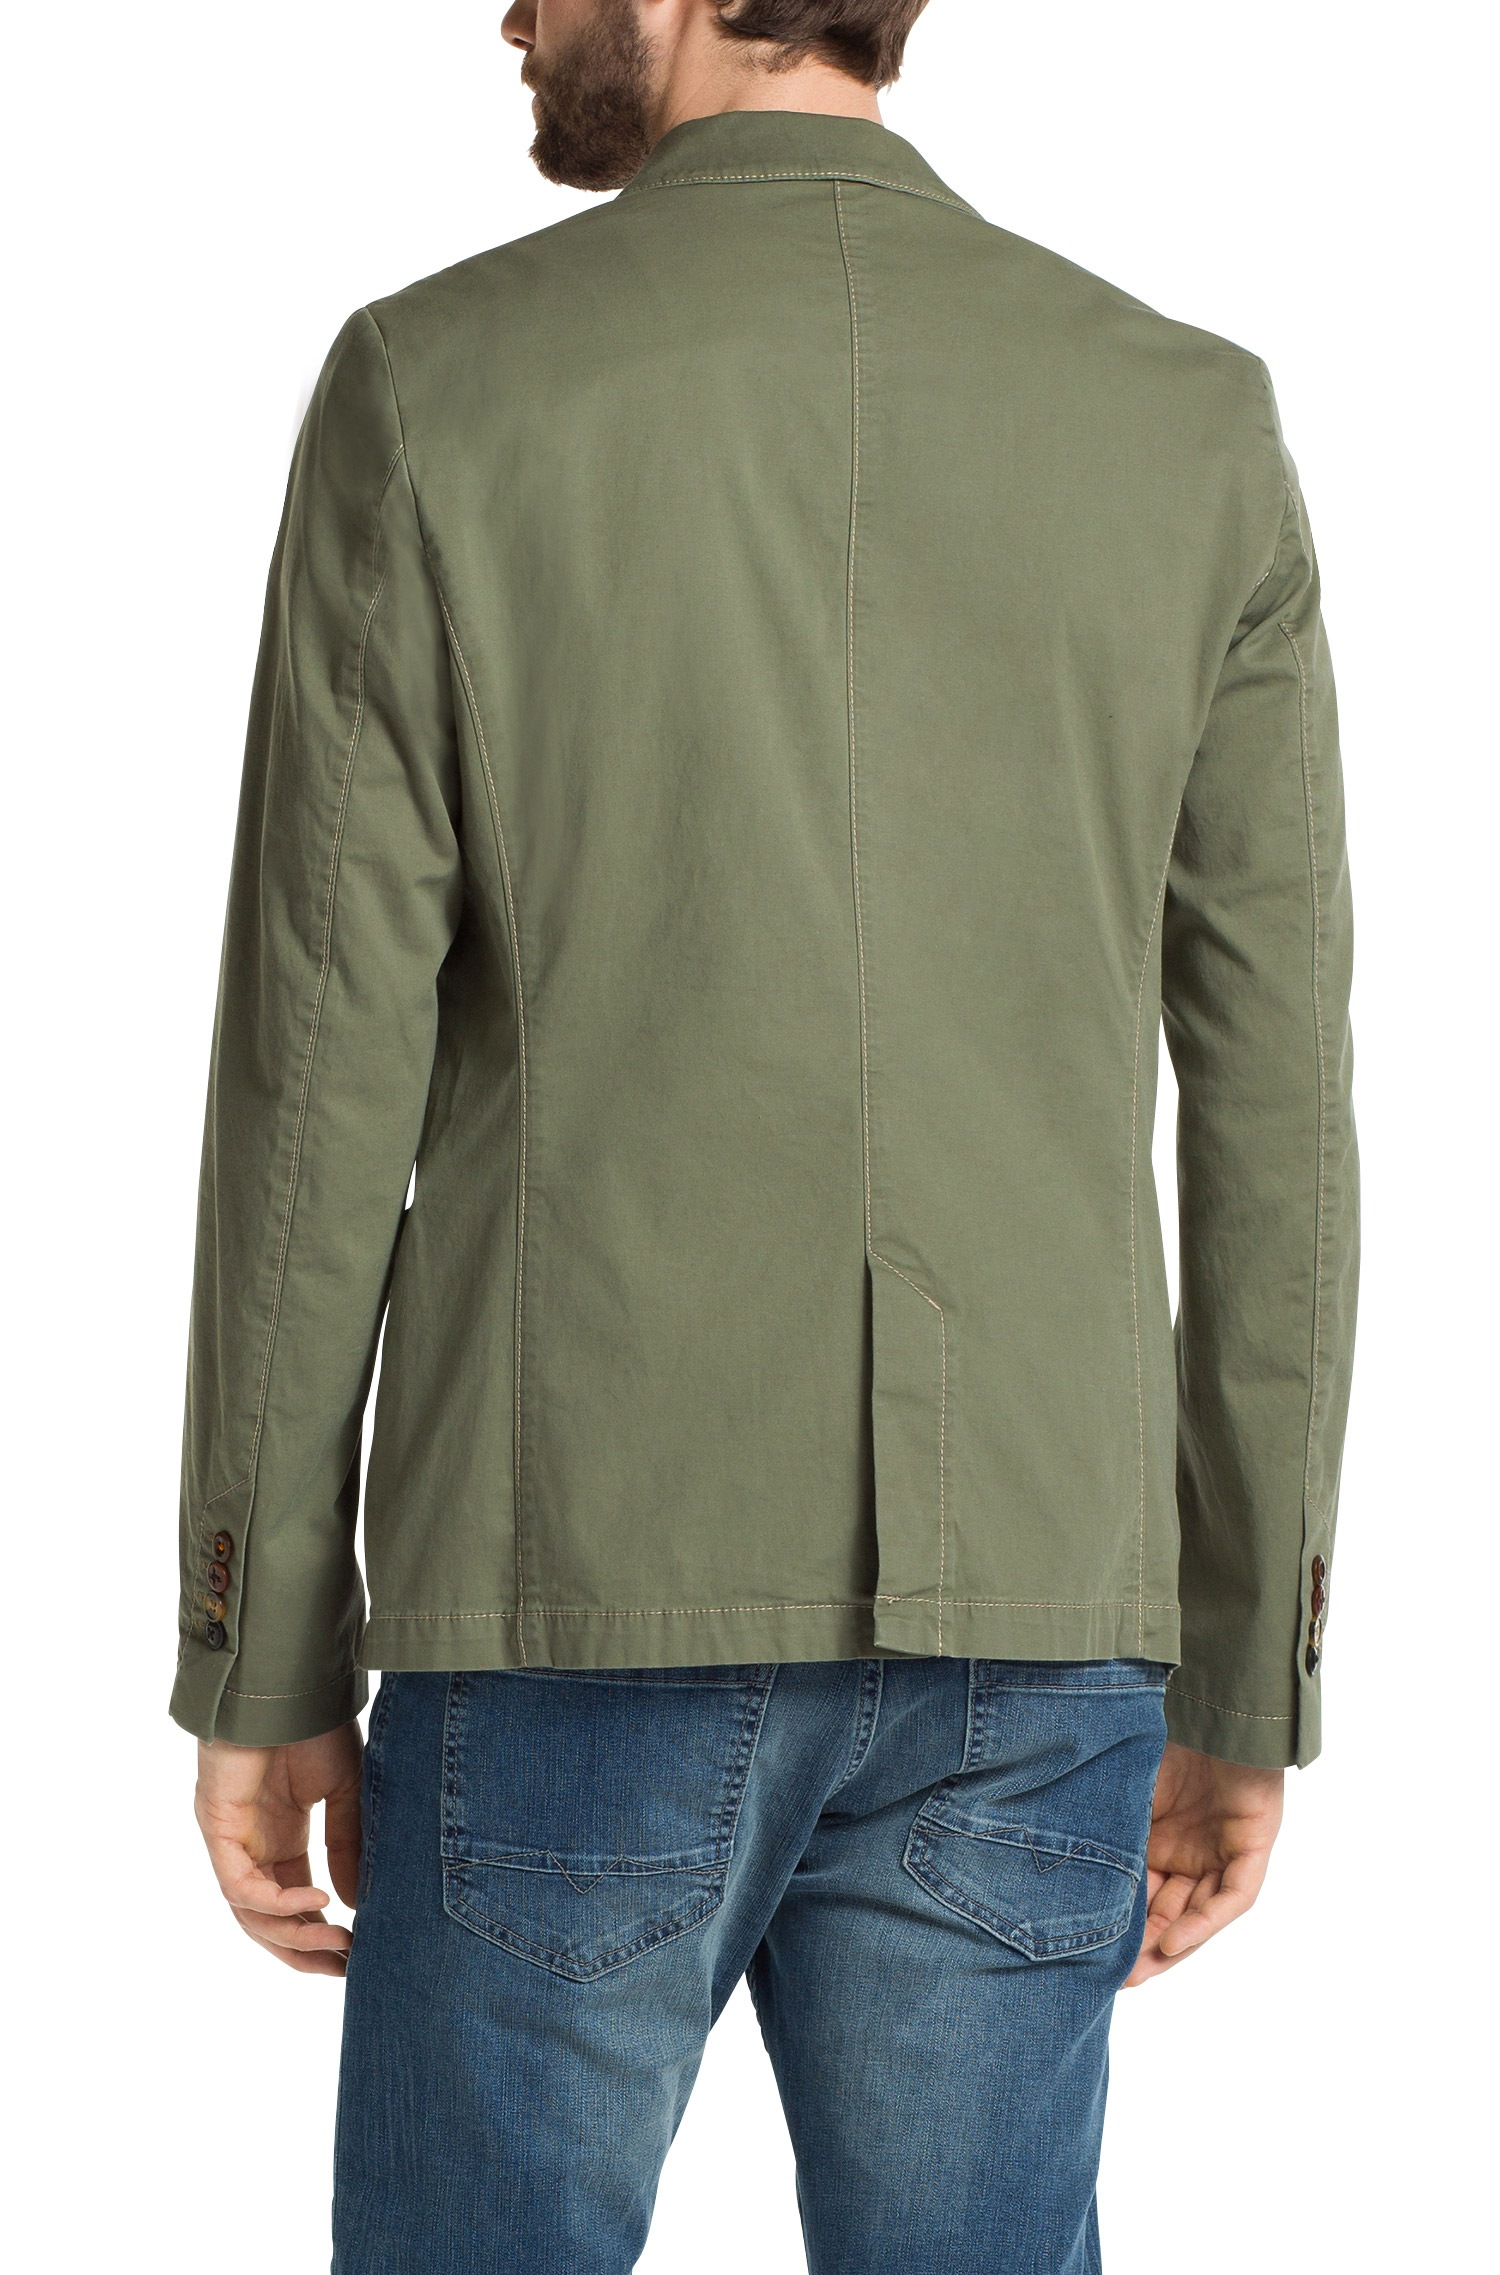 BOSS Orange 'Benestretch-W' | Stretch Cotton Jacket in Green for Men - Lyst